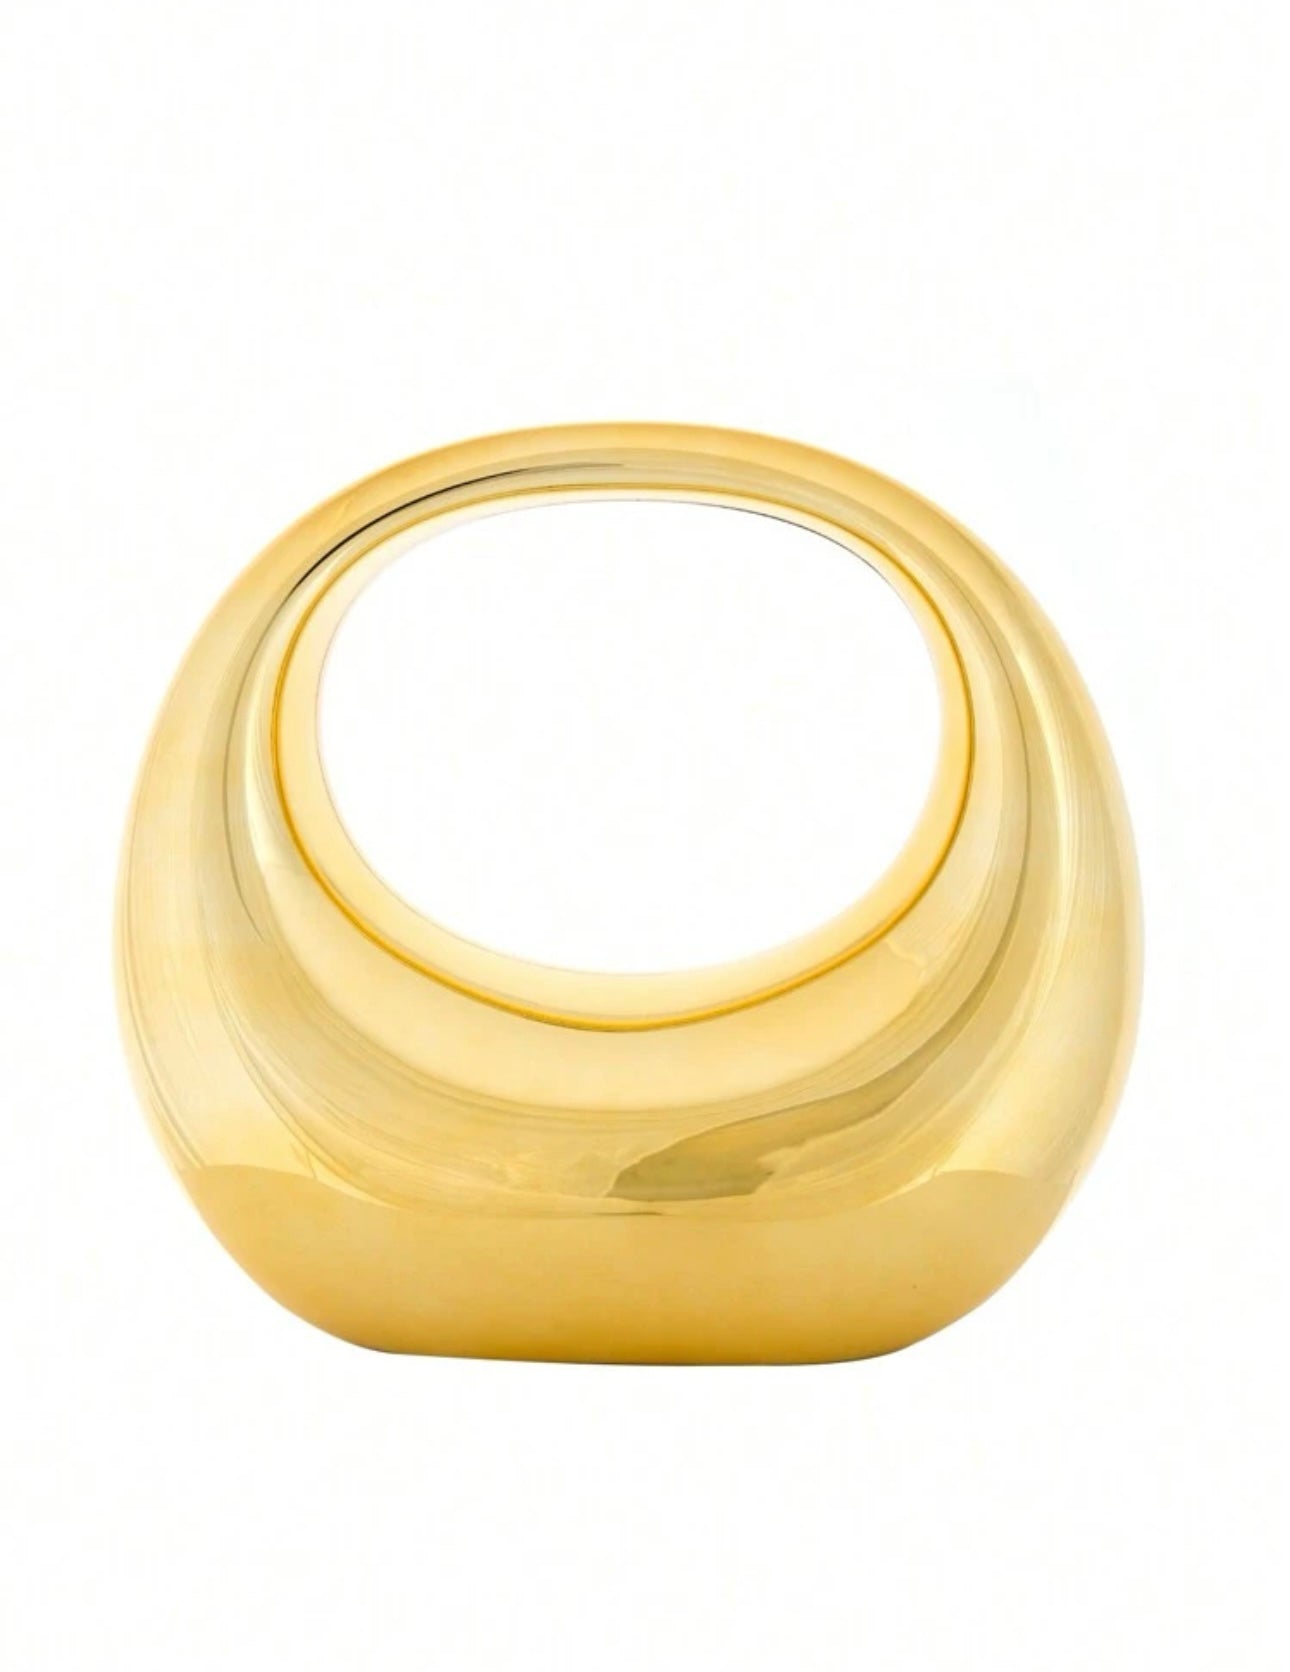 Max Acrylic Circle Clutch (Gold)